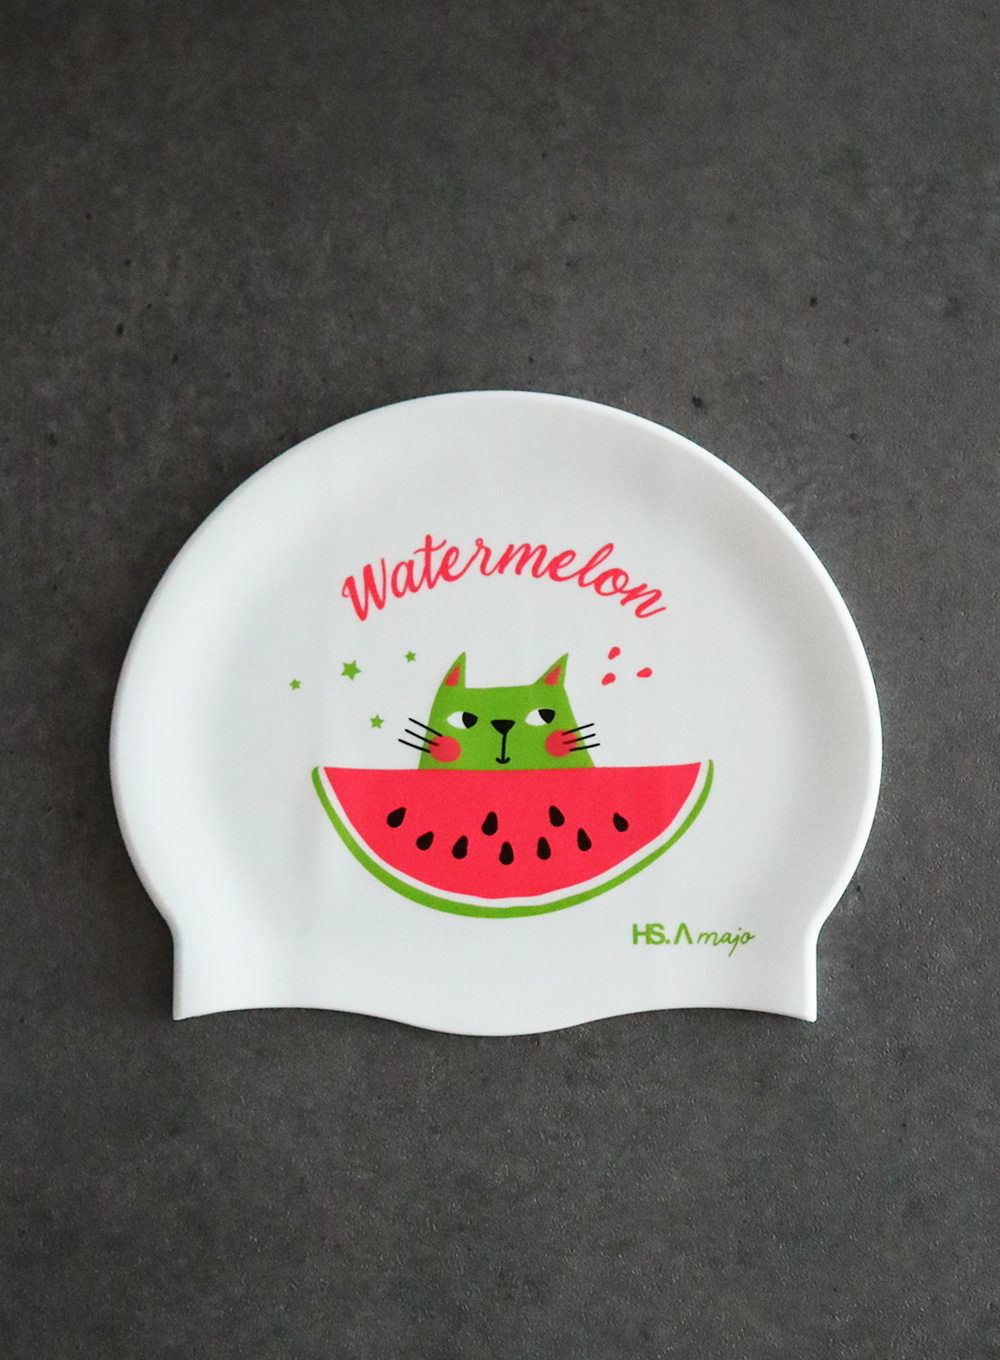 like watermelon